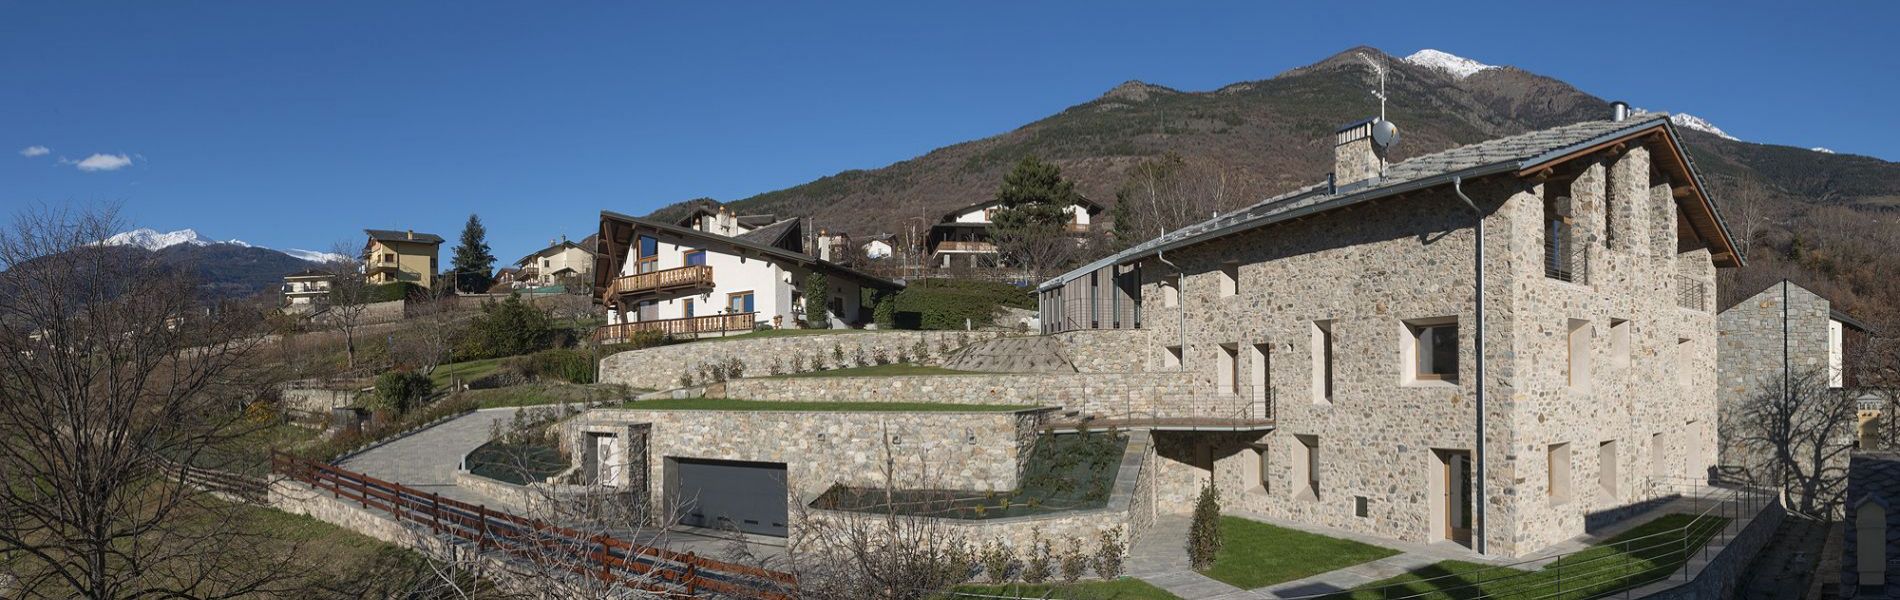 tipica casa in pietra della Valle d'Aosta